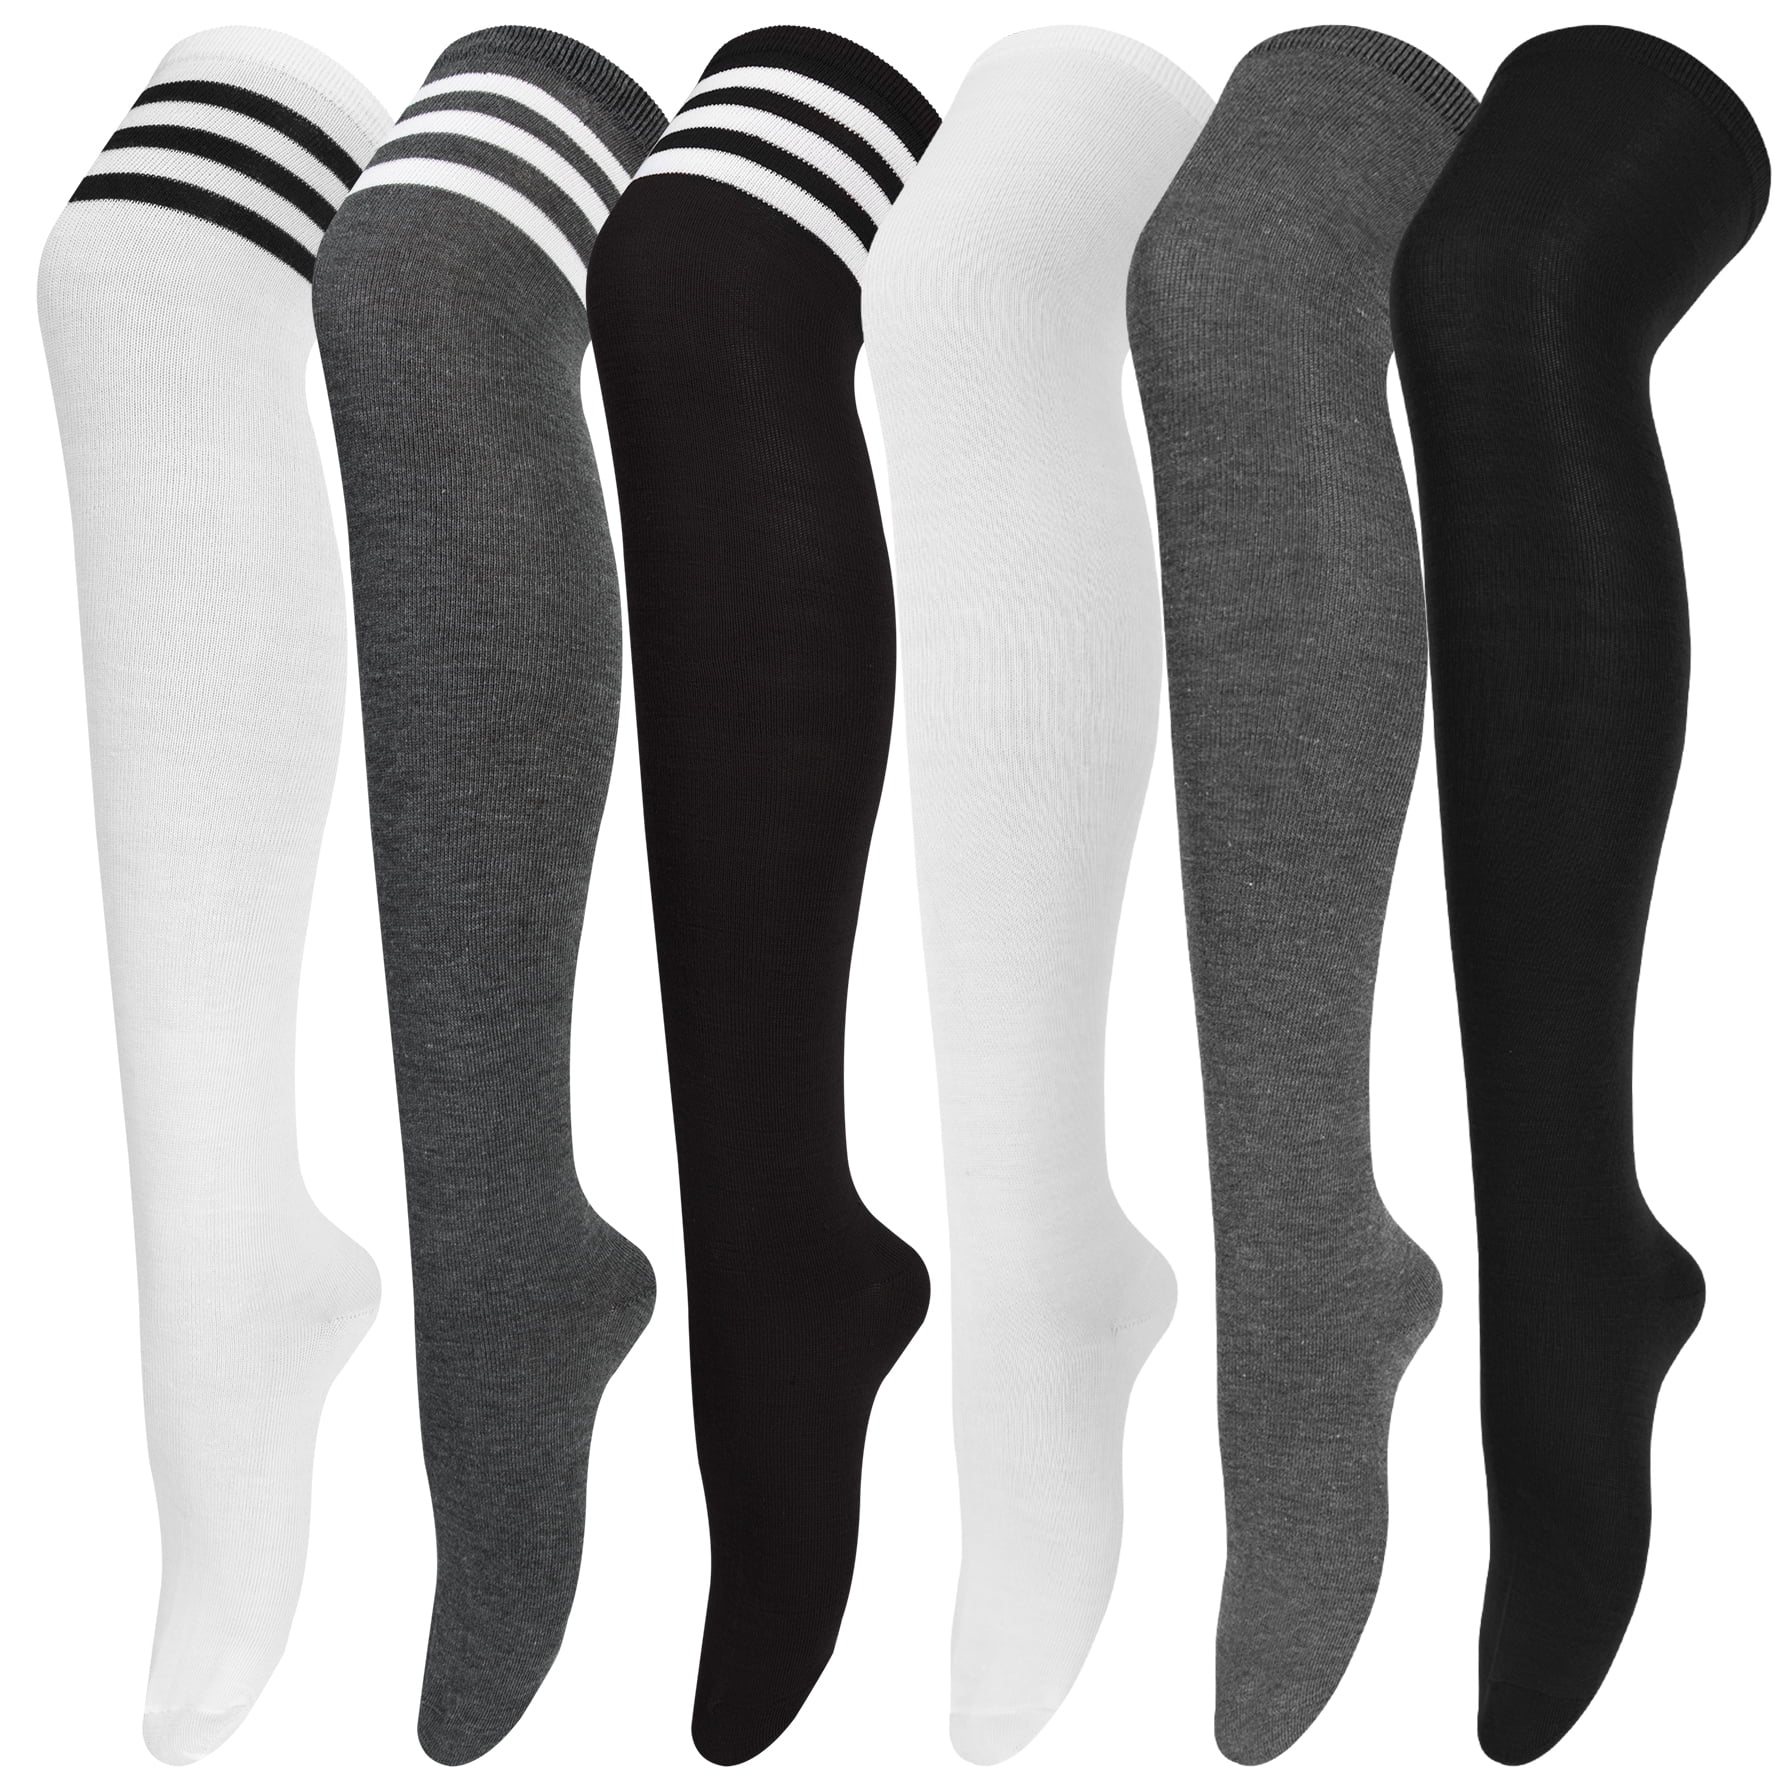 Loritta 6 Pairs Womens Thigh High Socks, over the Knee High Socks ...